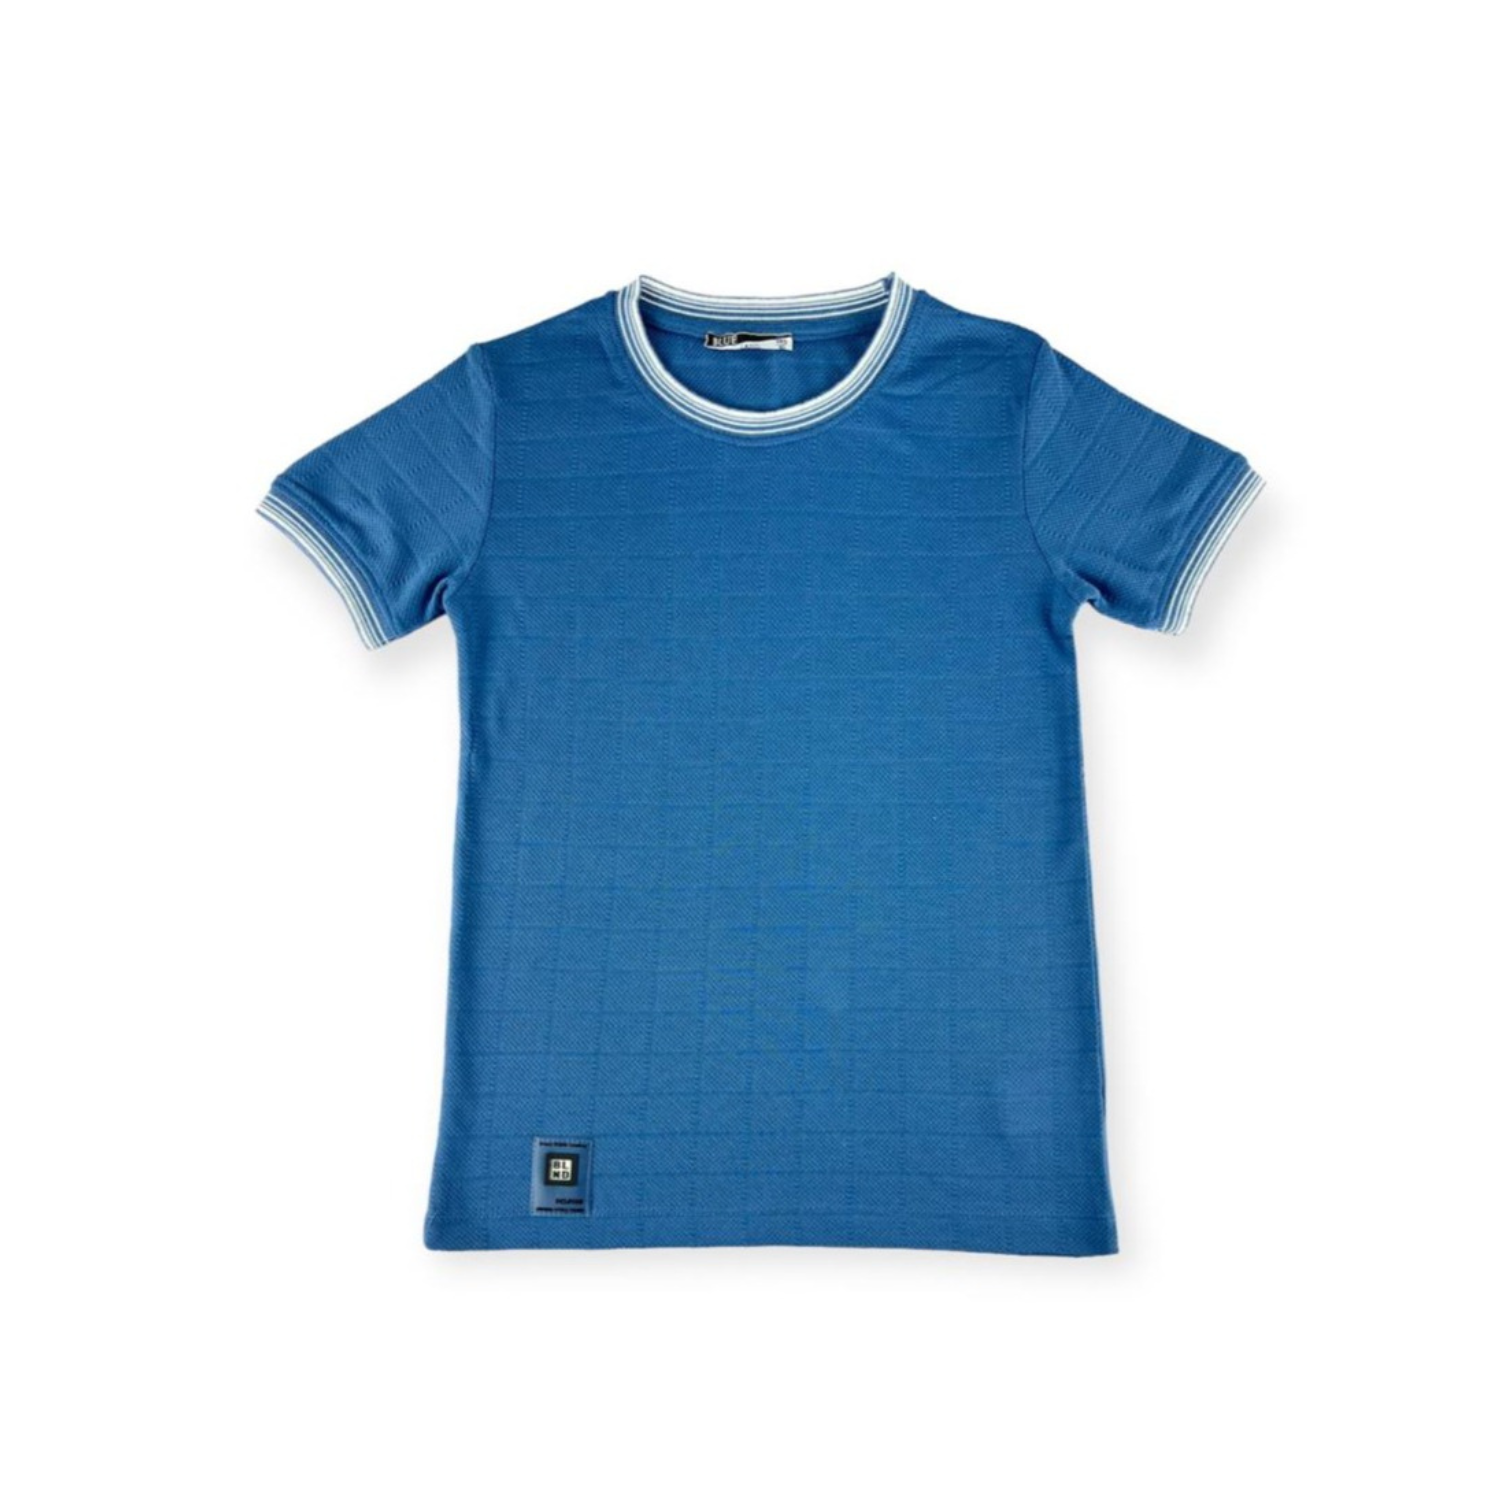 Blue Lagoon Boys Shirt